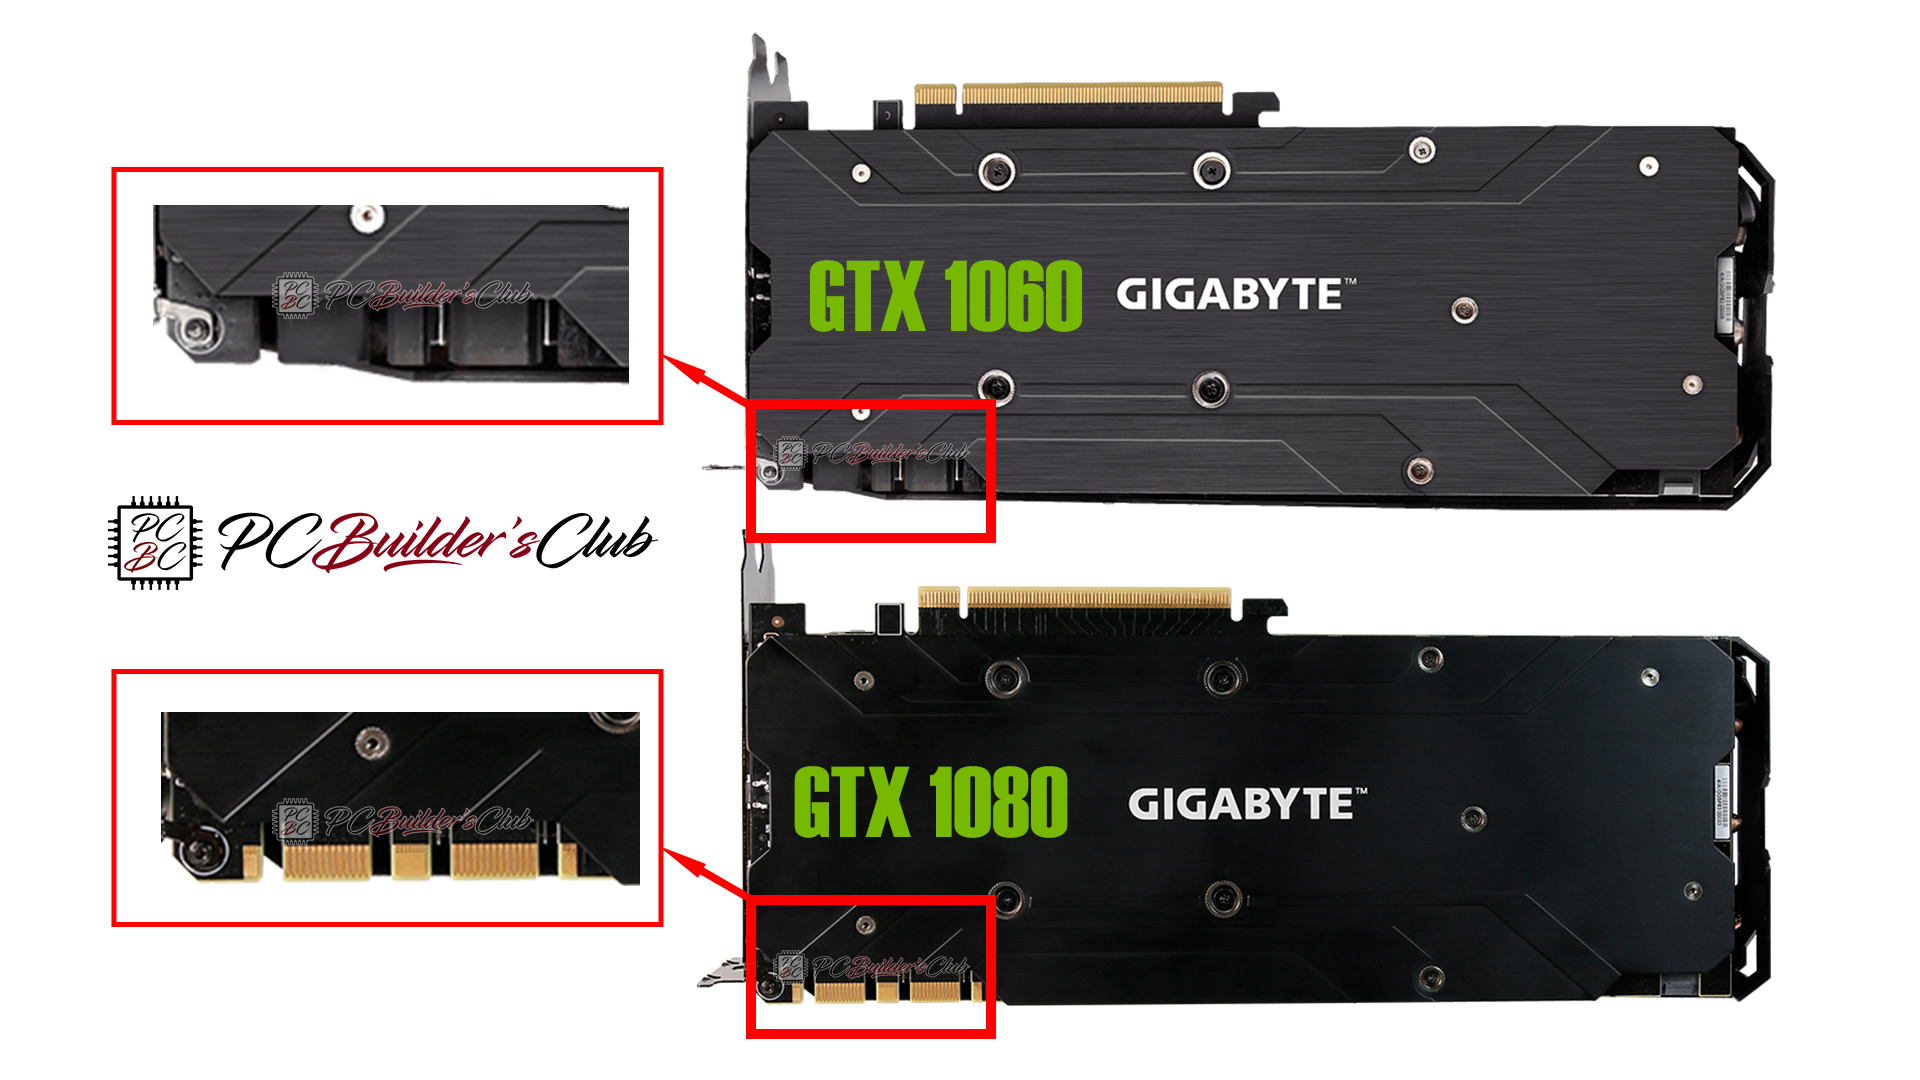 Gigabyte GTX 1060 GDDR5X G1 Gaming GTX 1080 Comparison SLI